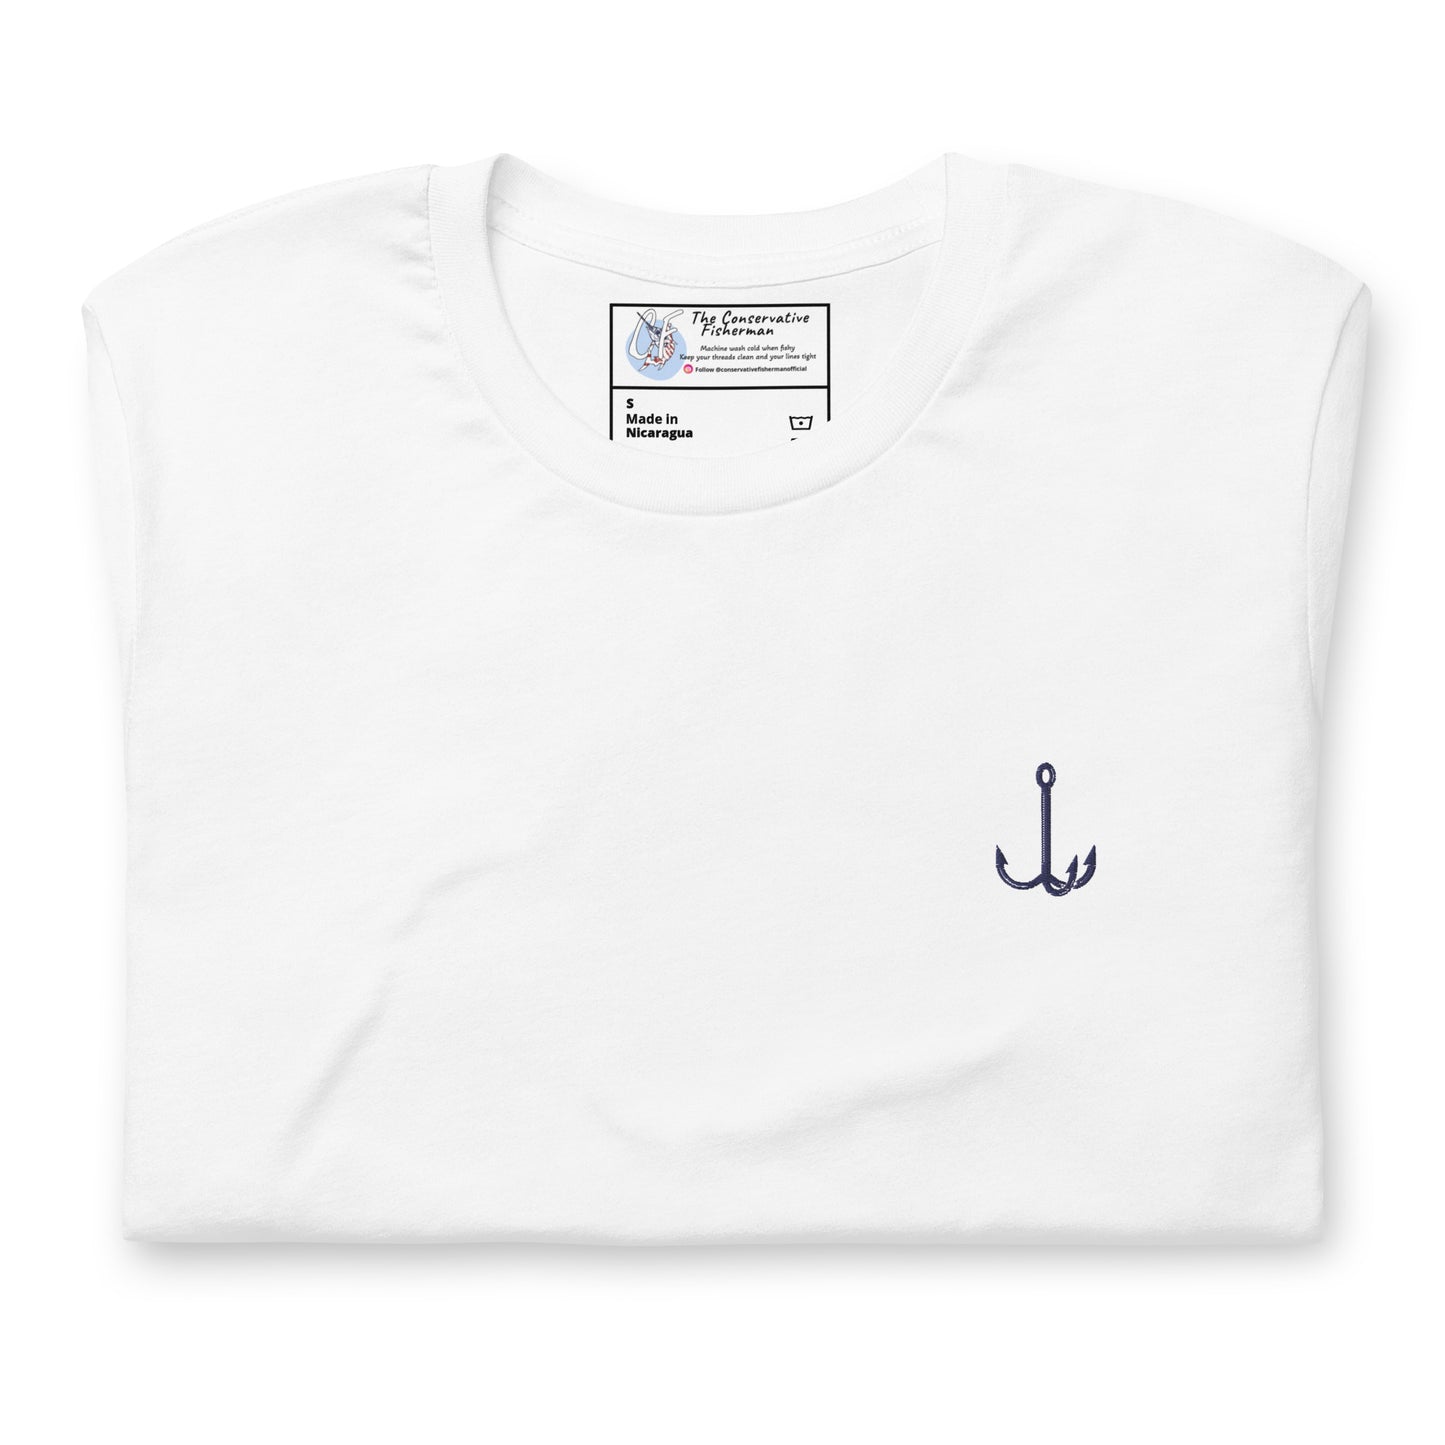 'Treble Hook' Premium Embroidered Shirt